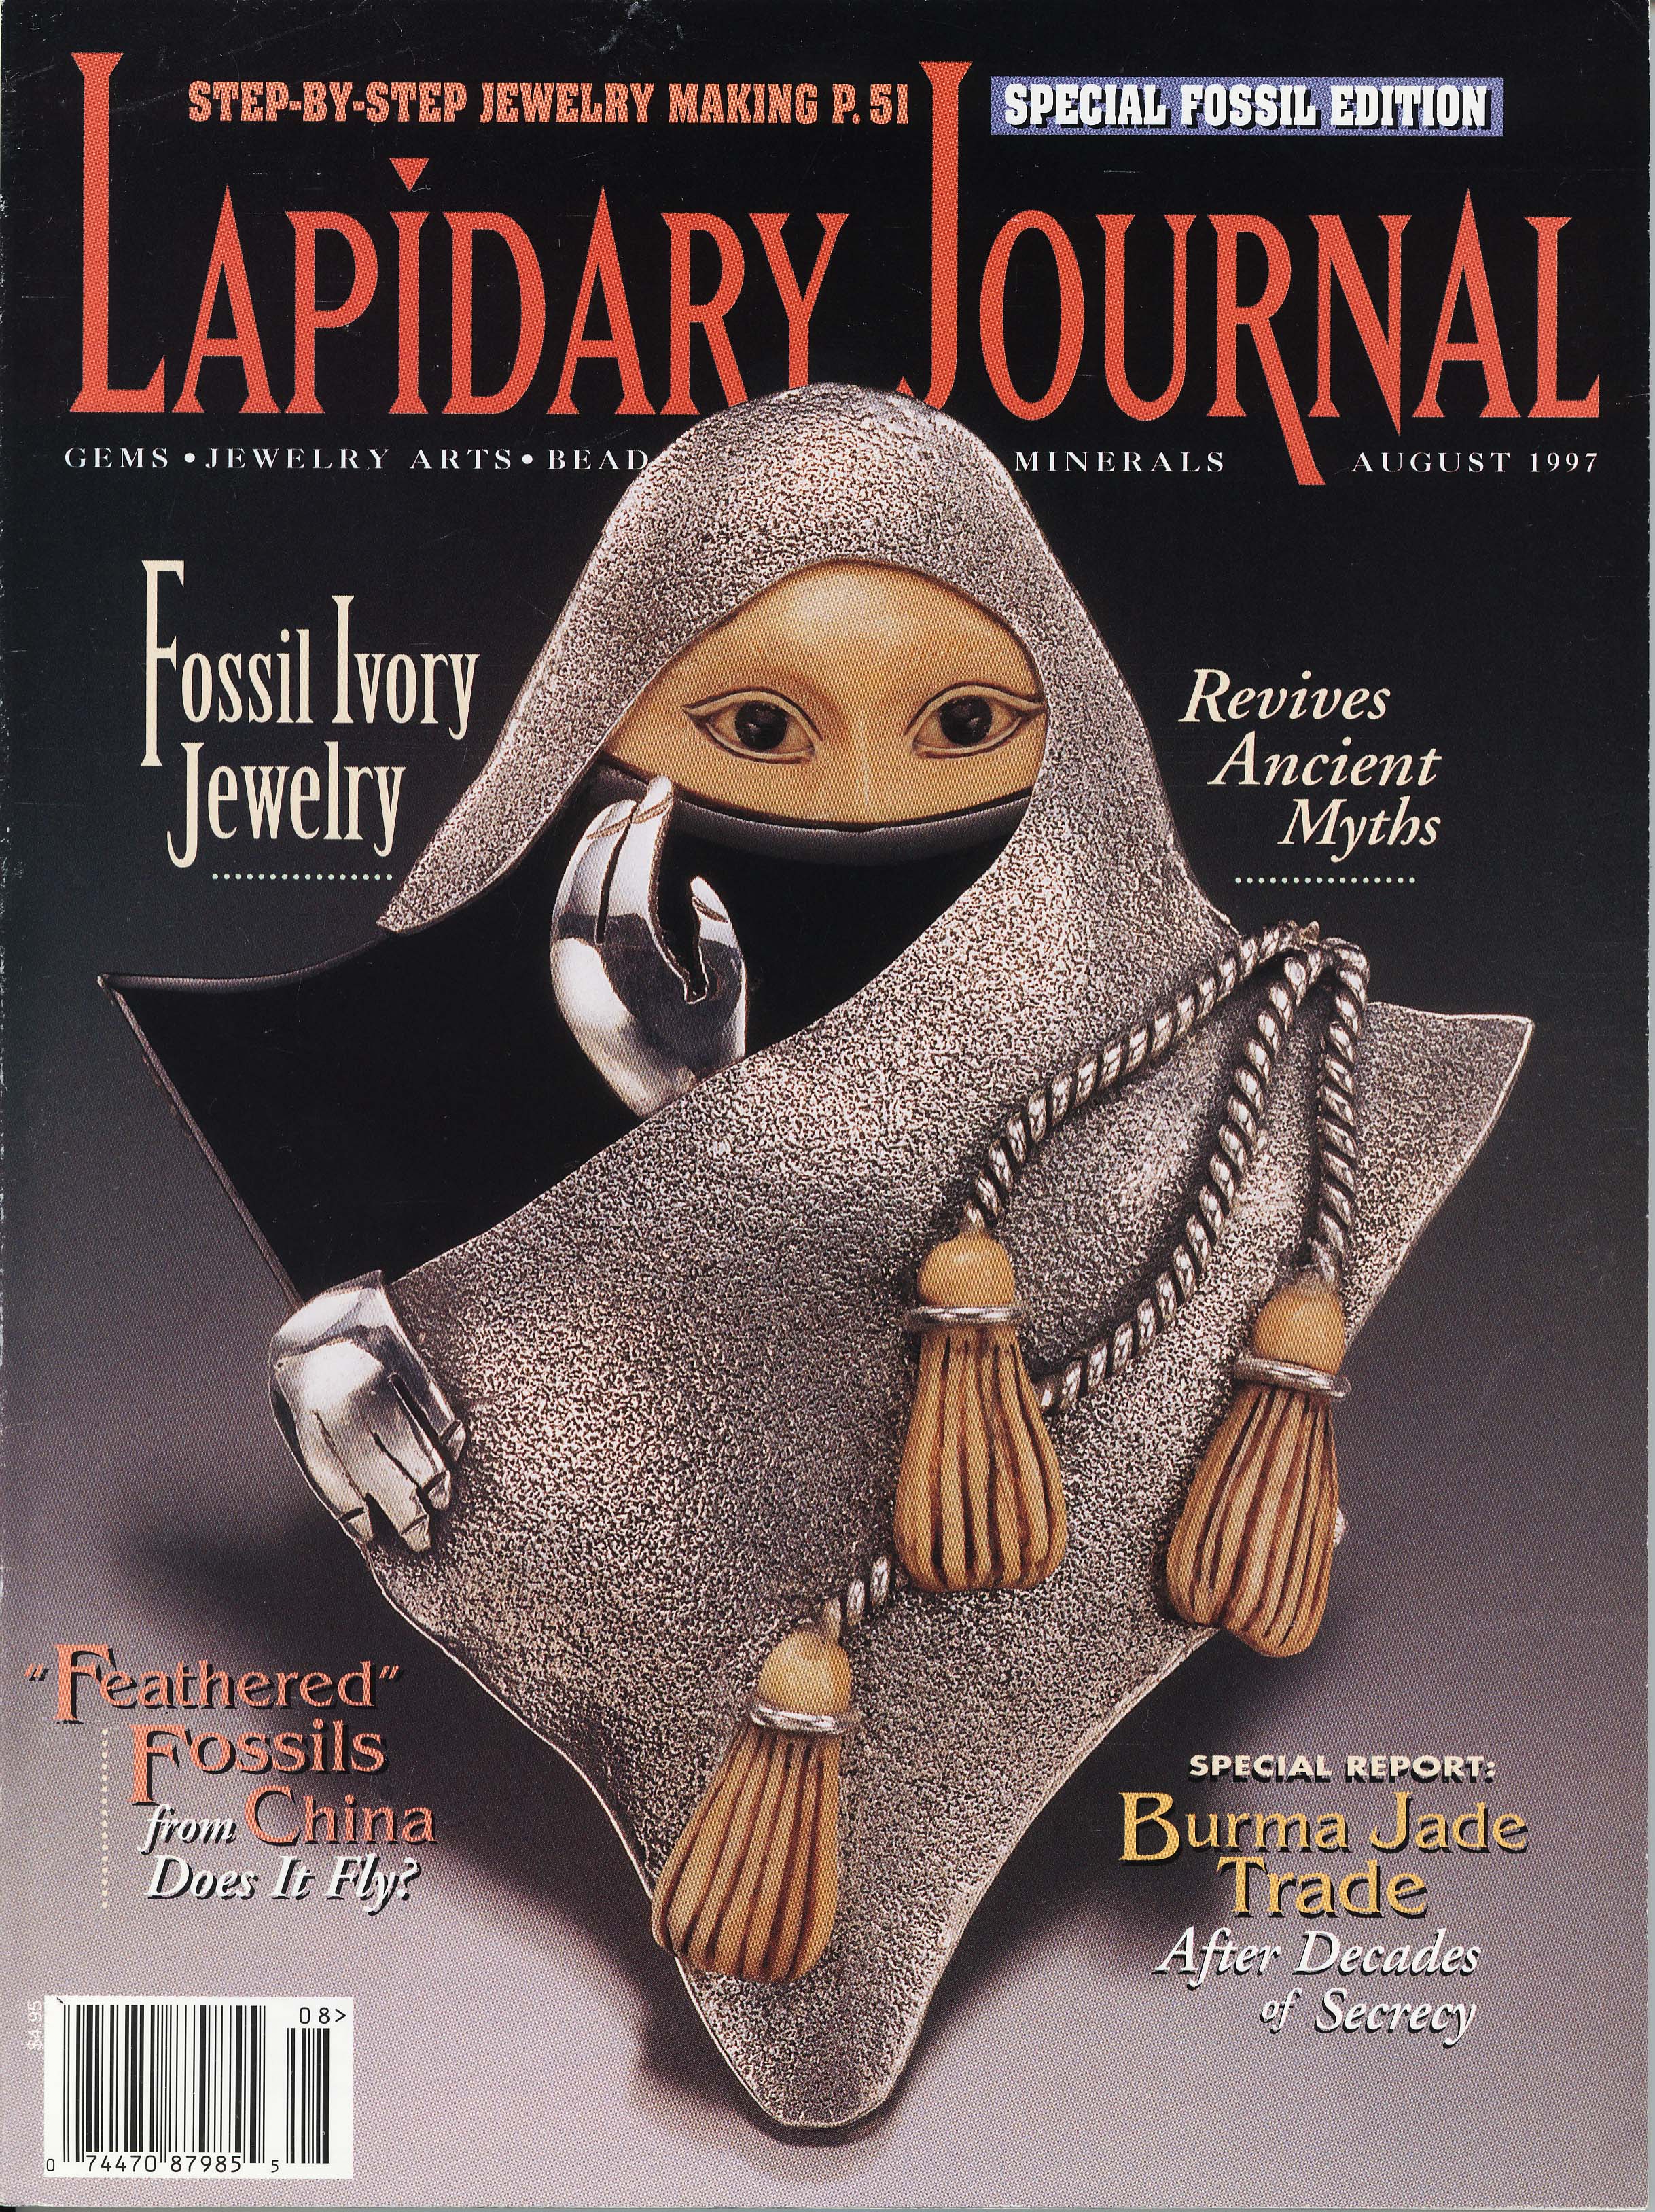 Zealandia-jewelry-lapidary-article-fossilized ivory jewelry